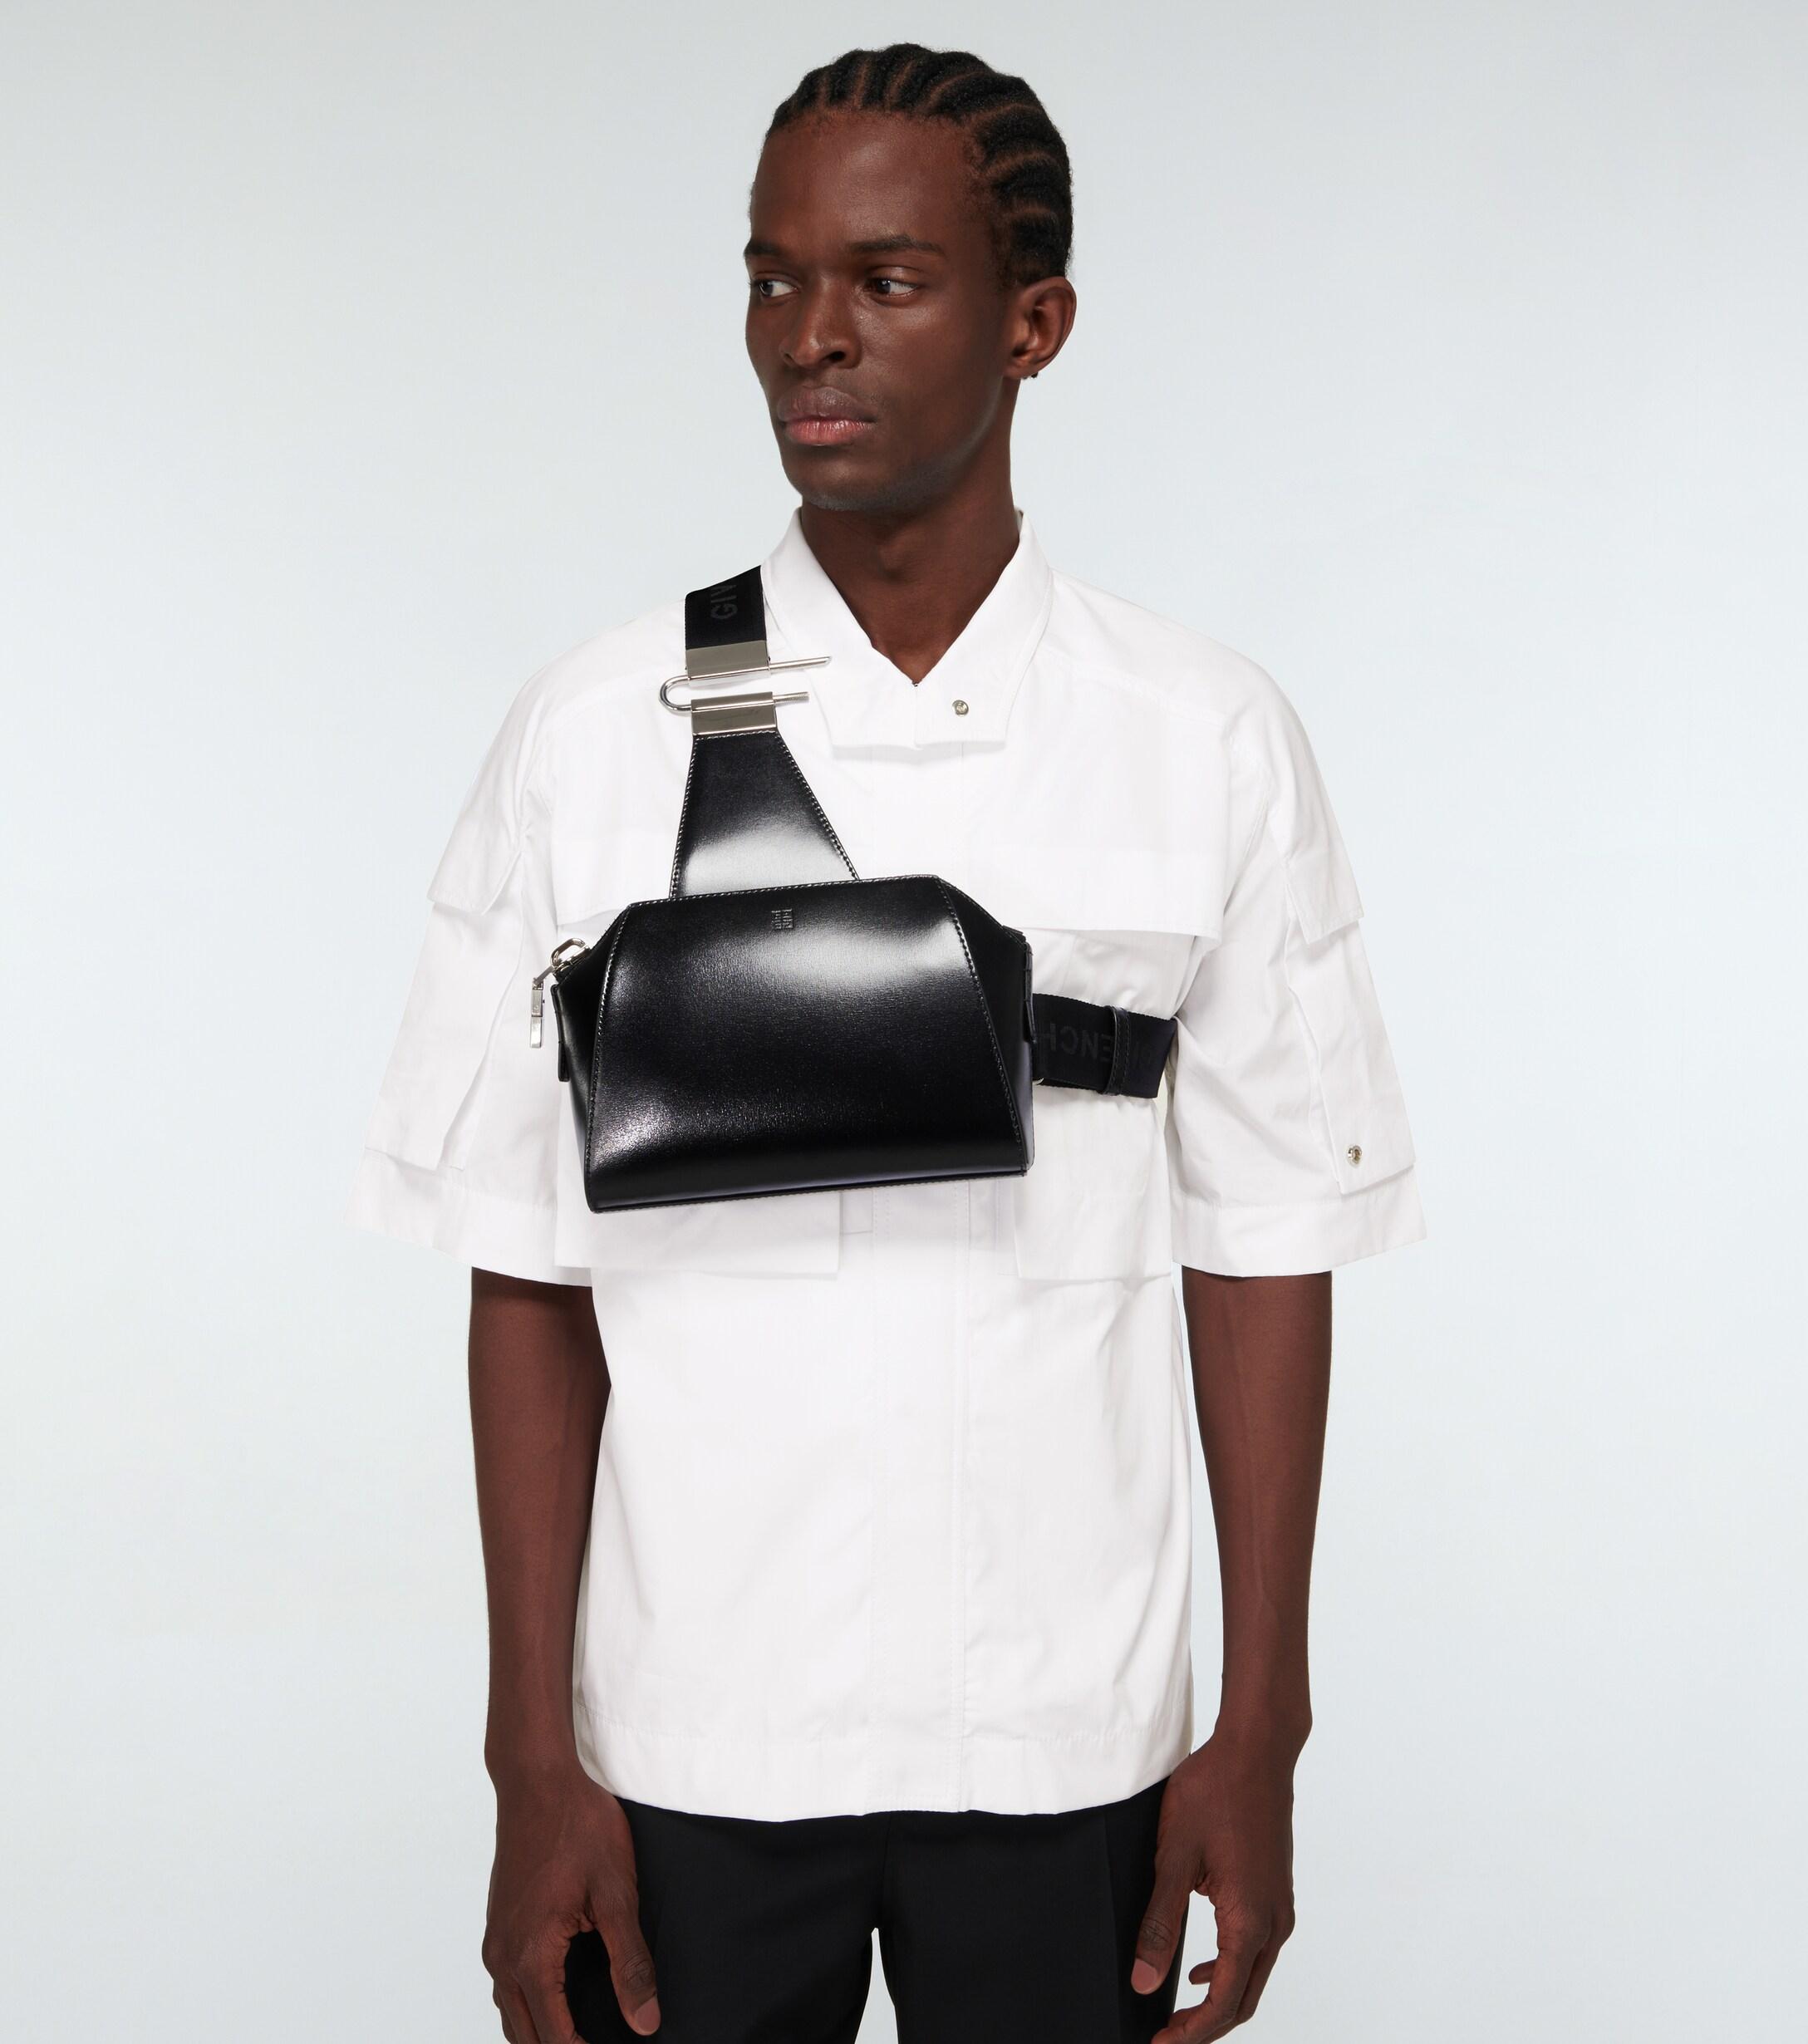 Givenchy Antigona Leather Crossbody Bag in Black for Men | Lyst